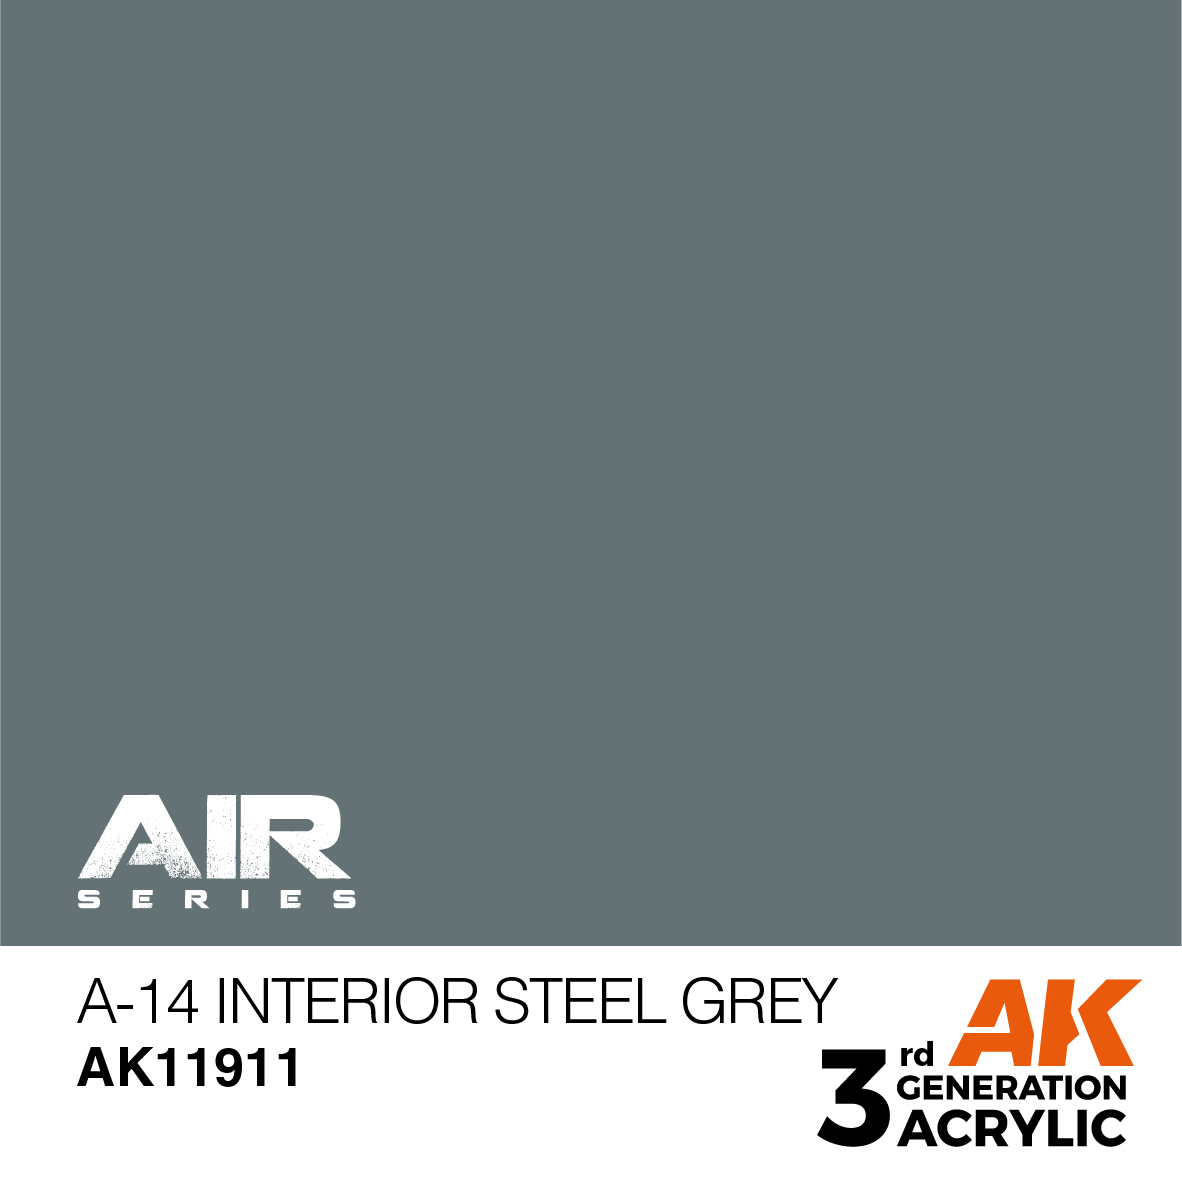 A-14 Interior Steel Grey – AIR